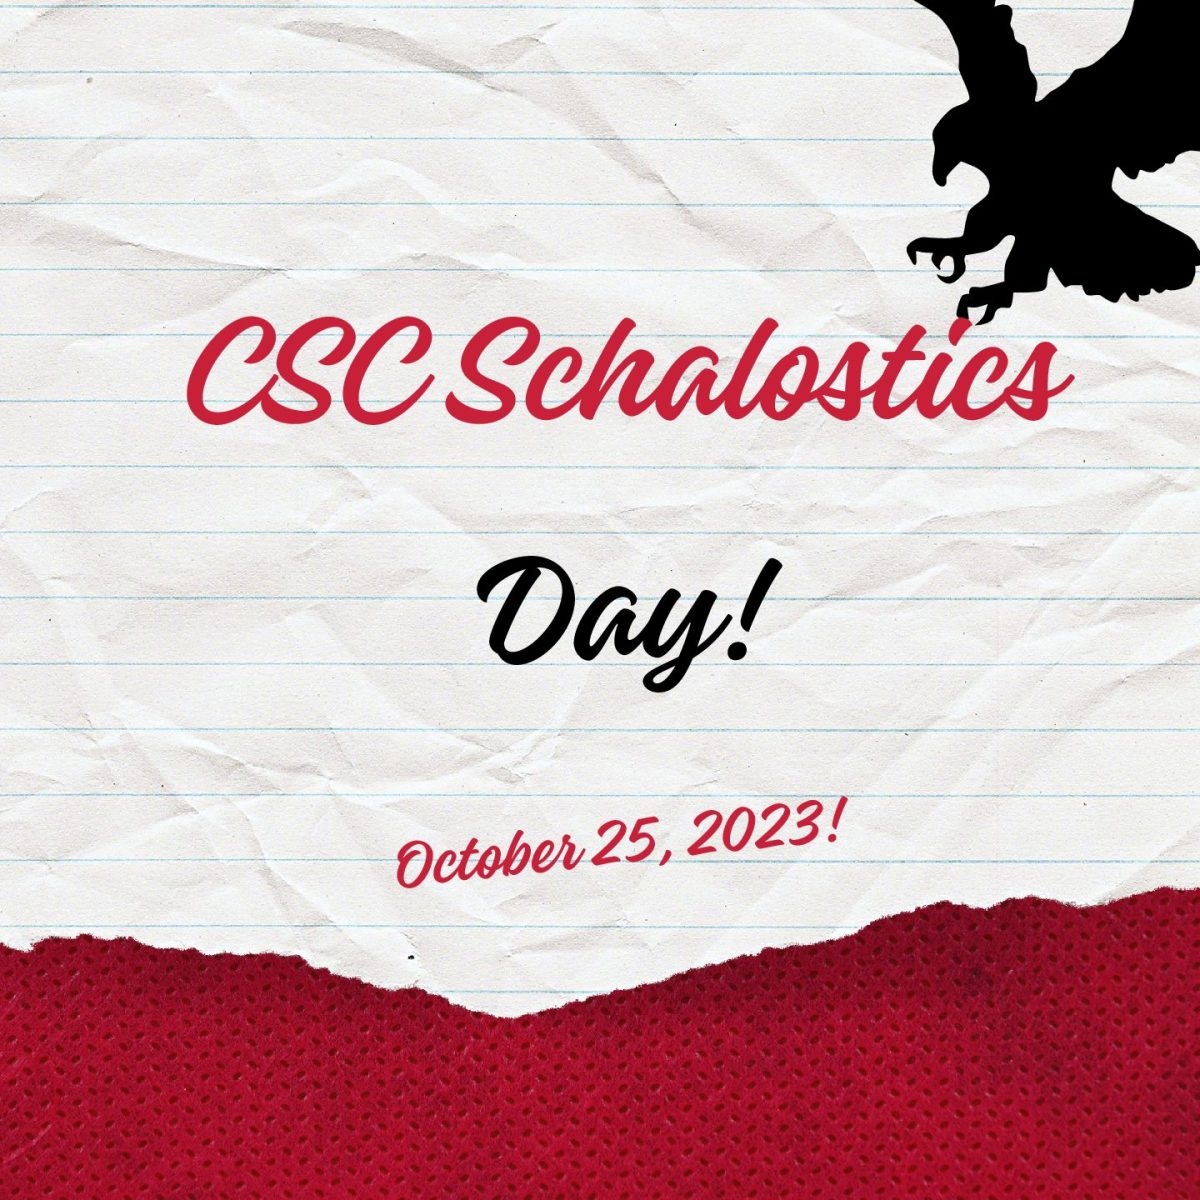 Chadron State College’s Scholastics Day